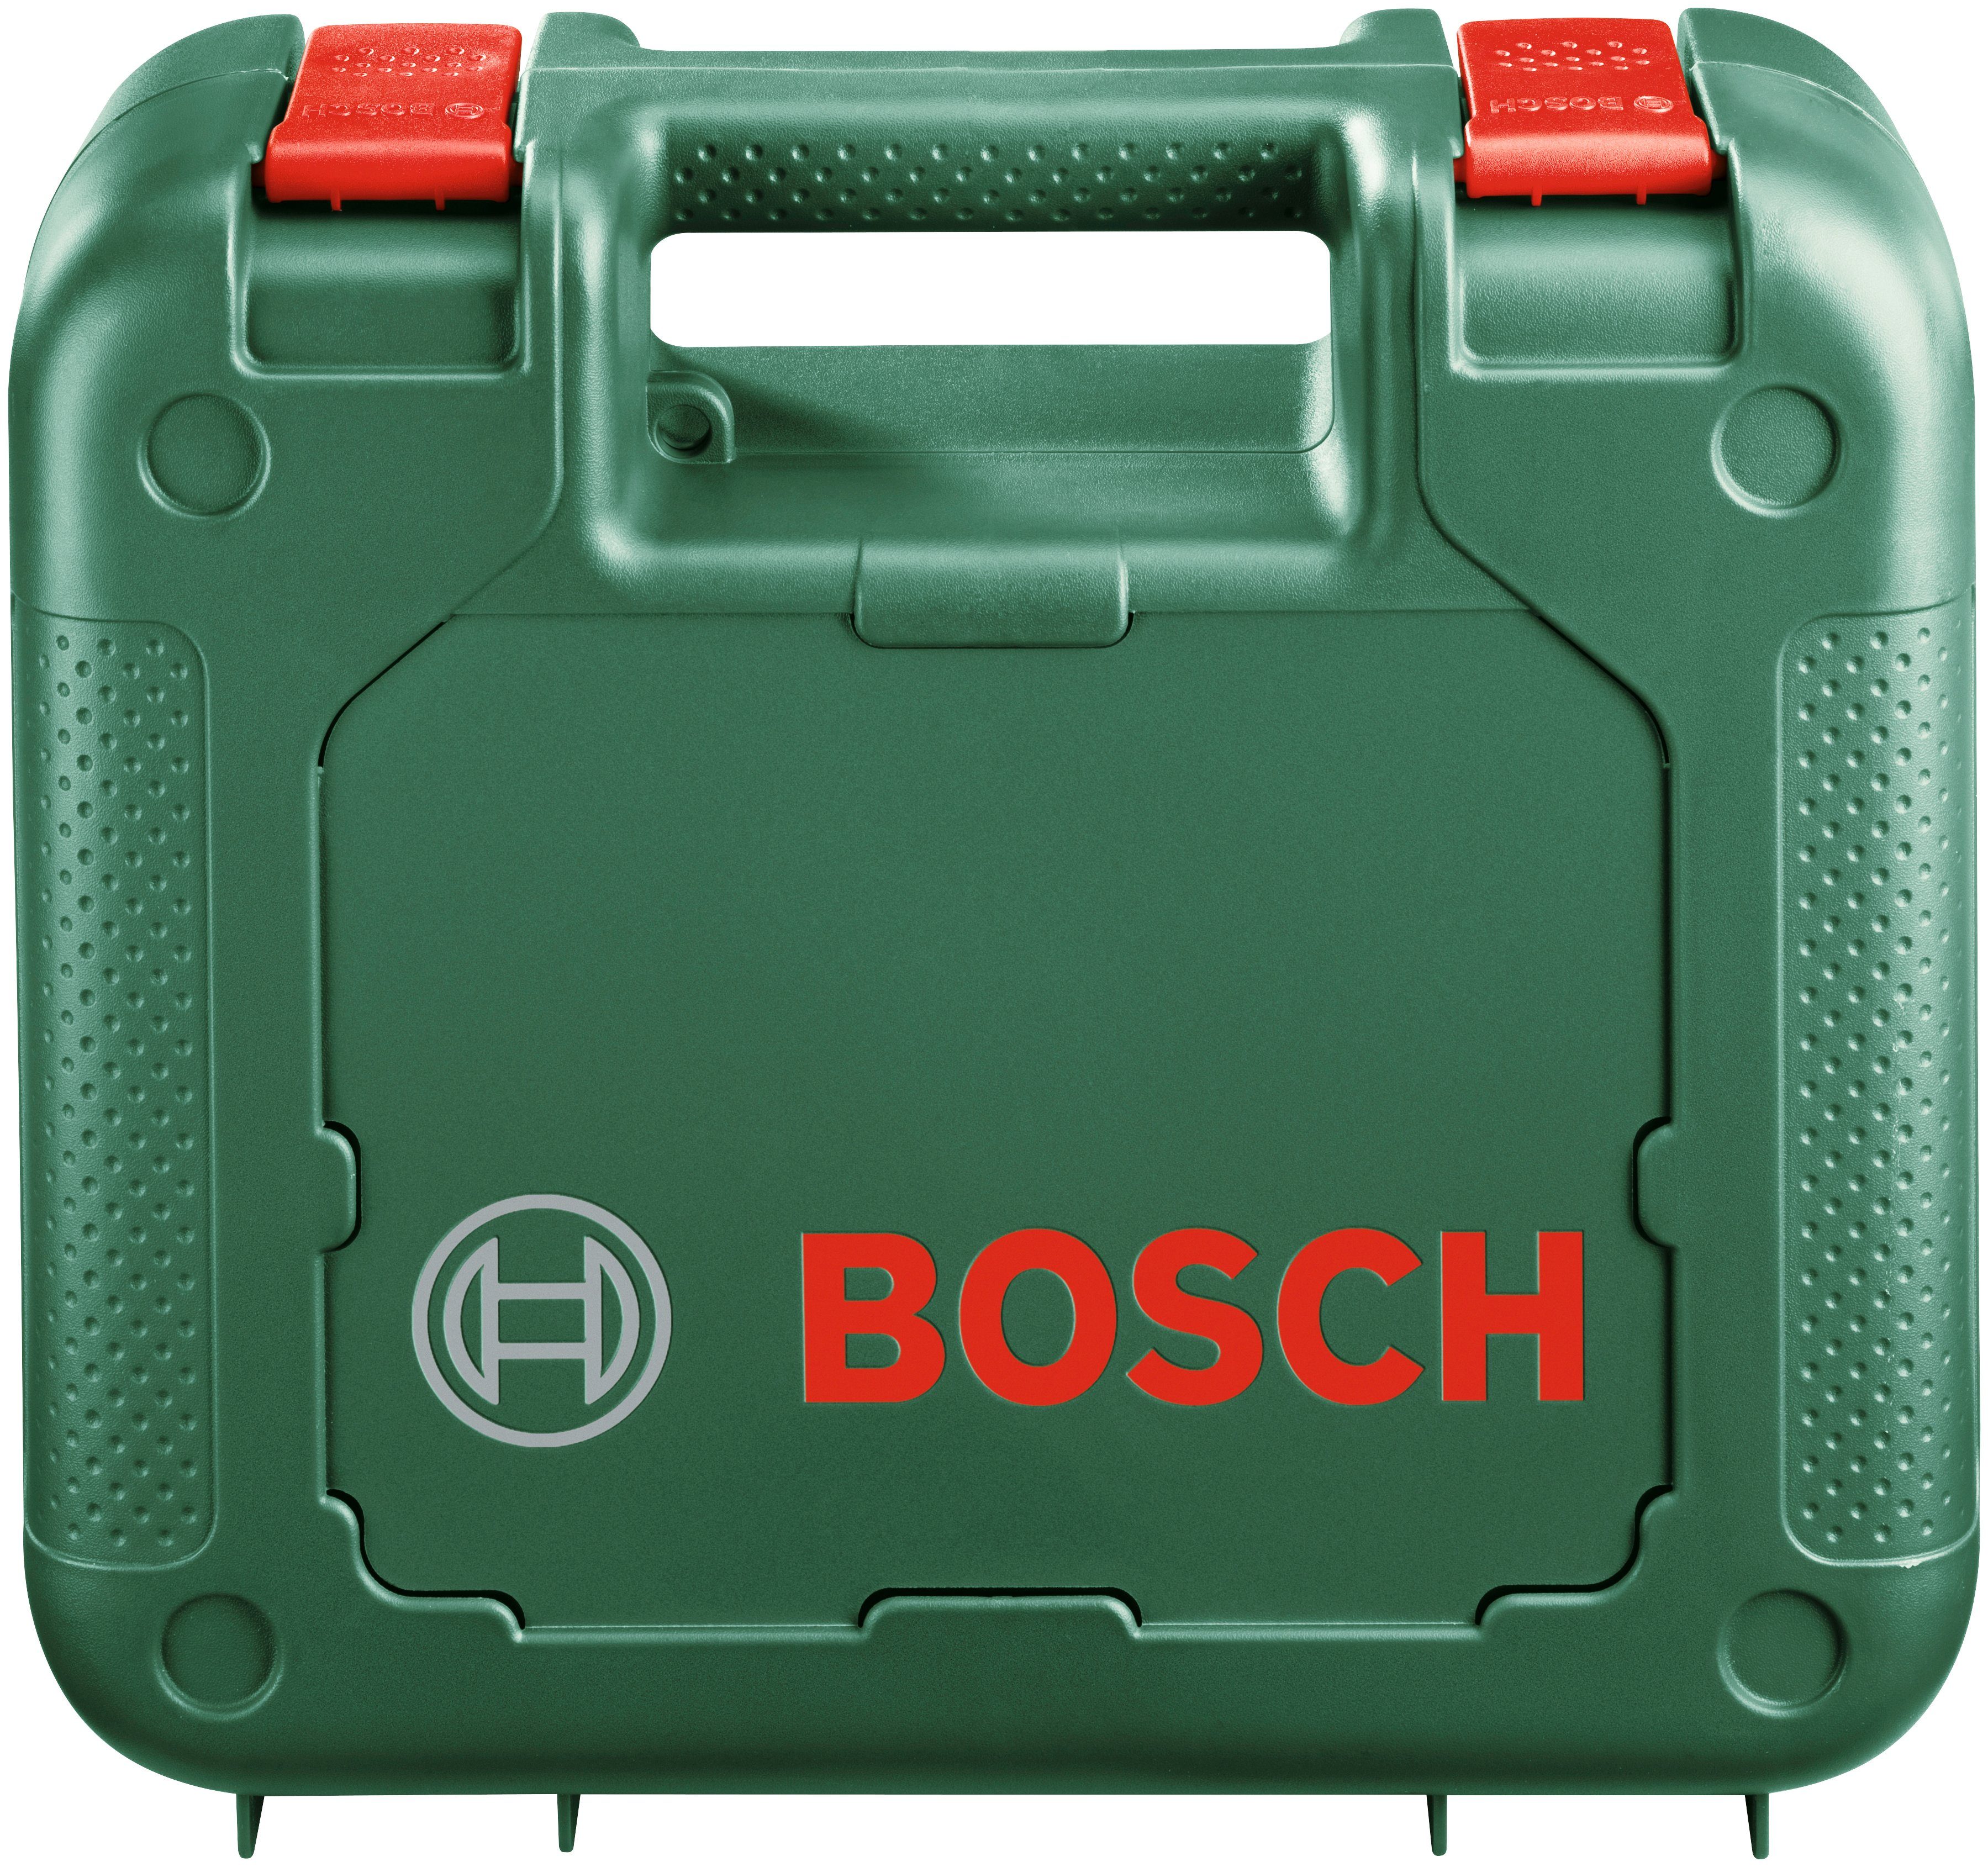 Bosch Home & Garden Akku-Bohrschrauber und Mikro Bit-Set USB Lader mit U/min, integriertem Select, (Set), 210 max. PSR